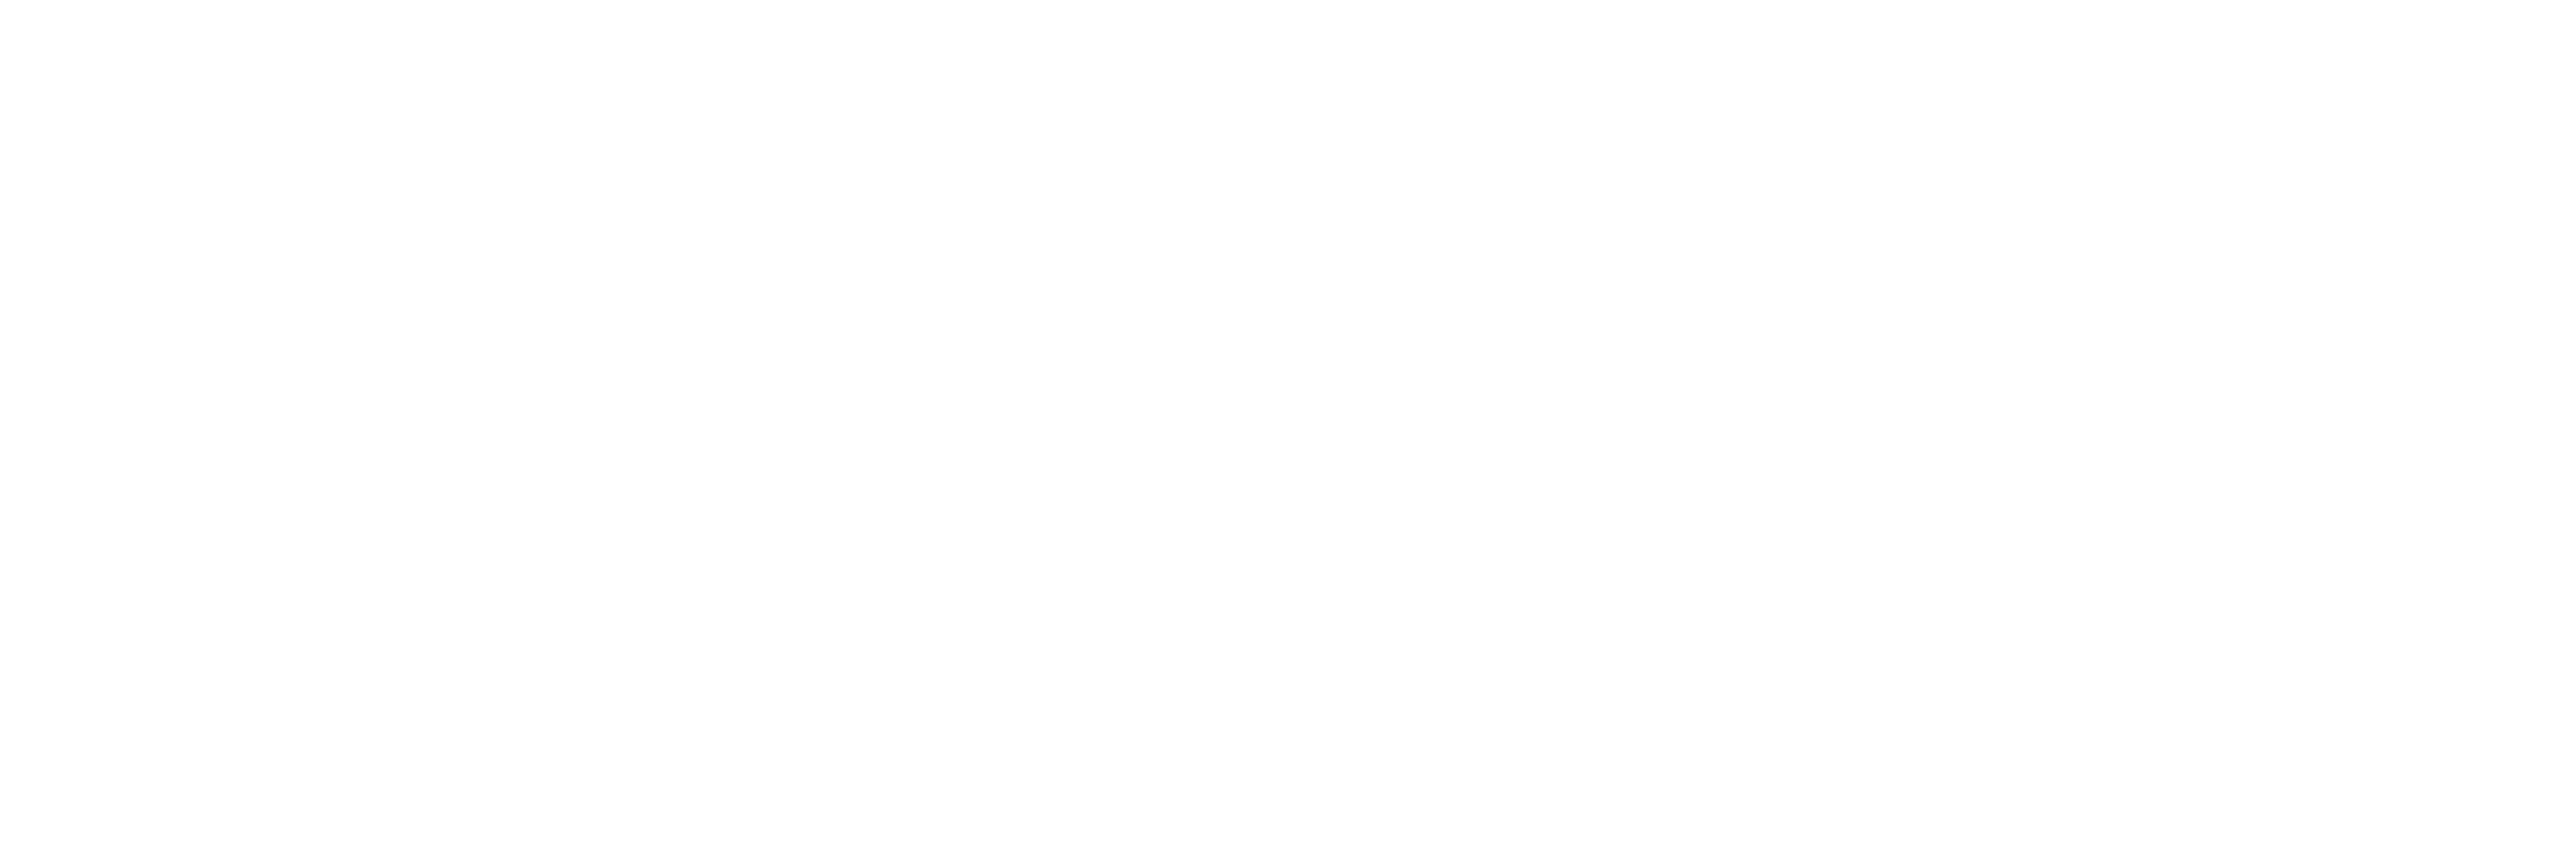 supremem logo windows